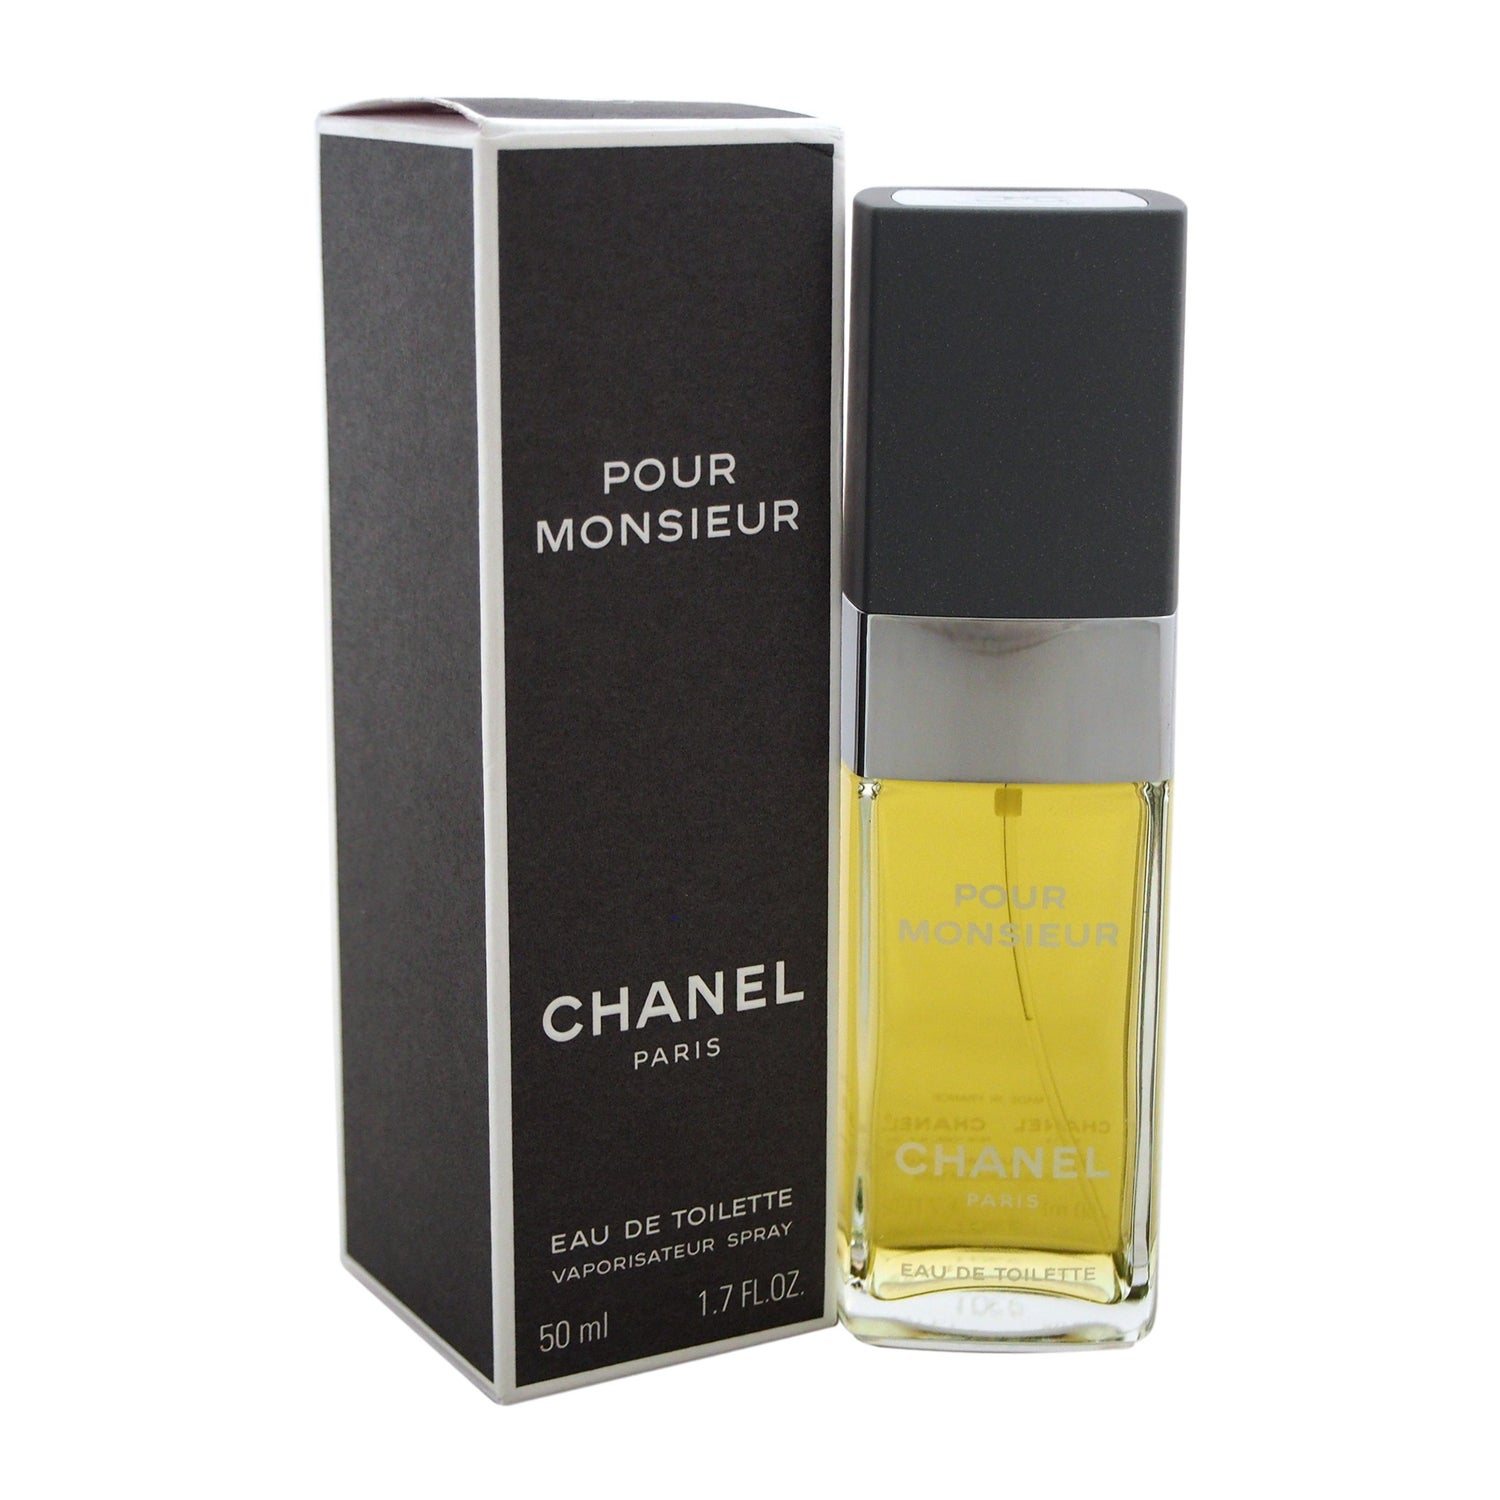 Chanel Pour Monsieur edp 75ml Best Price